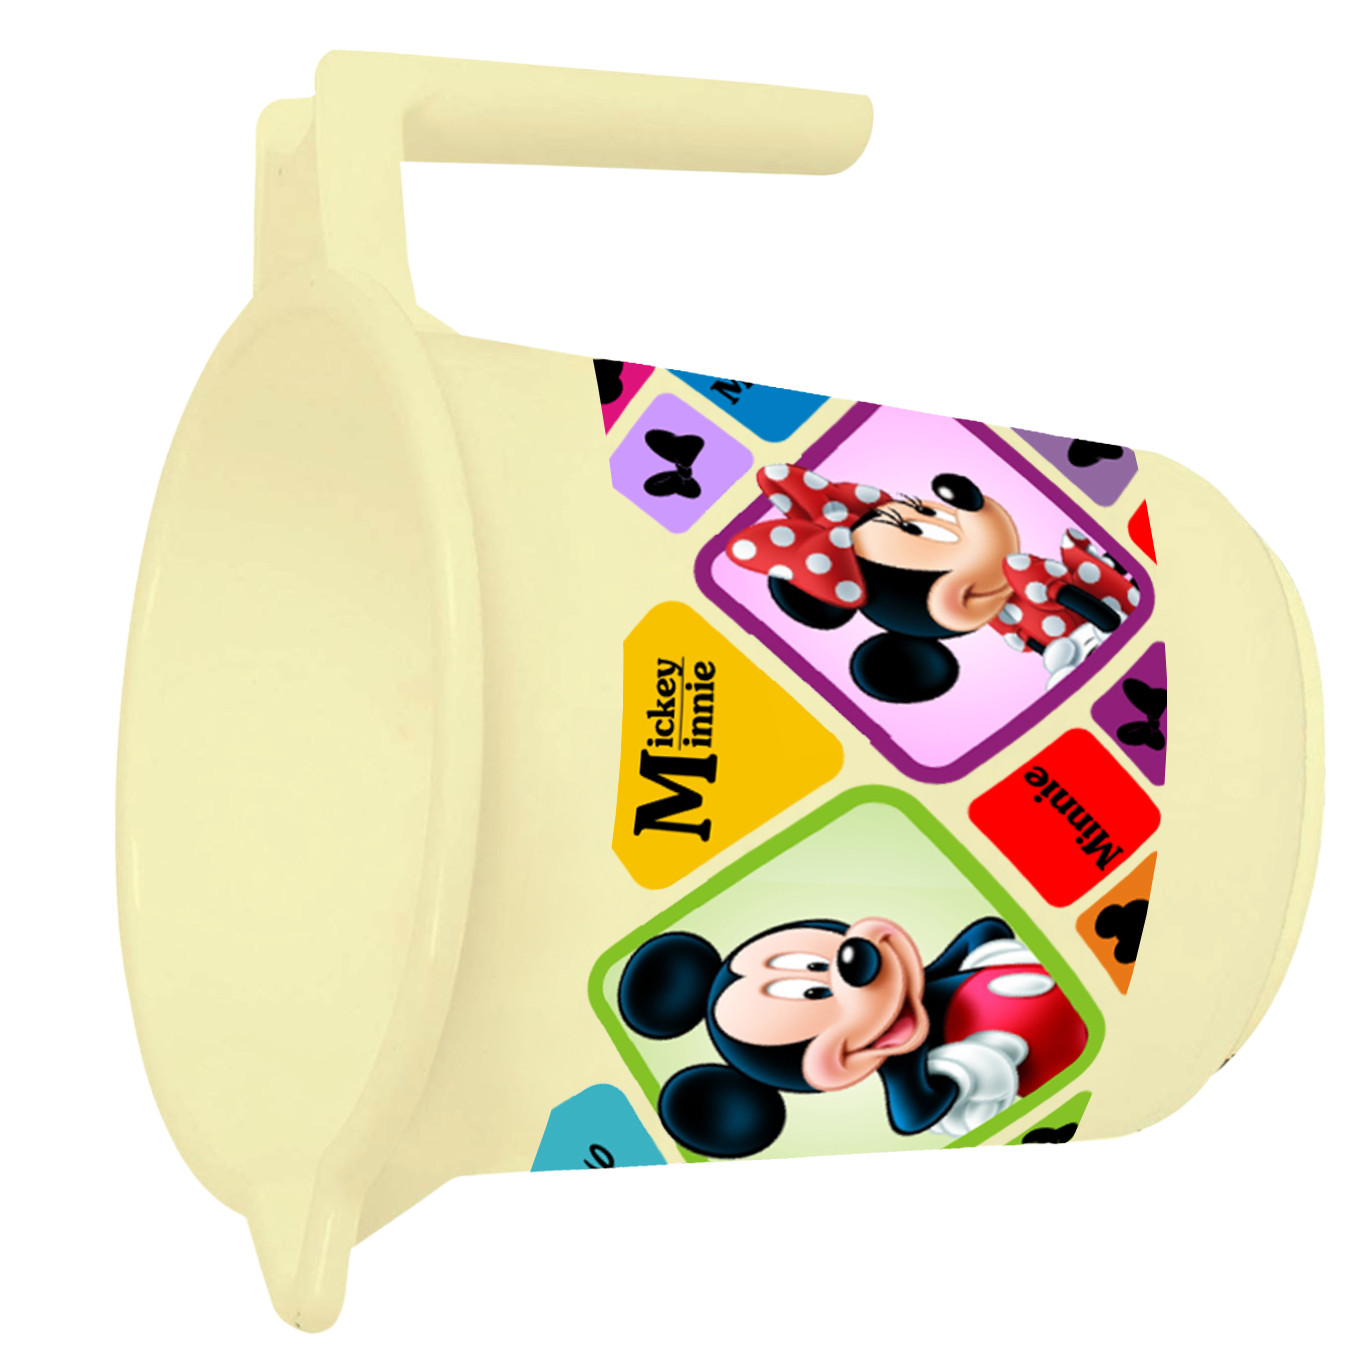 Kuber Industries Disney Mickey Minnie Print 8 Pieces Unbreakable Strong Plastic Bathroom Mug,500 ML (Cream & White) -HS_35_KUBMART17641